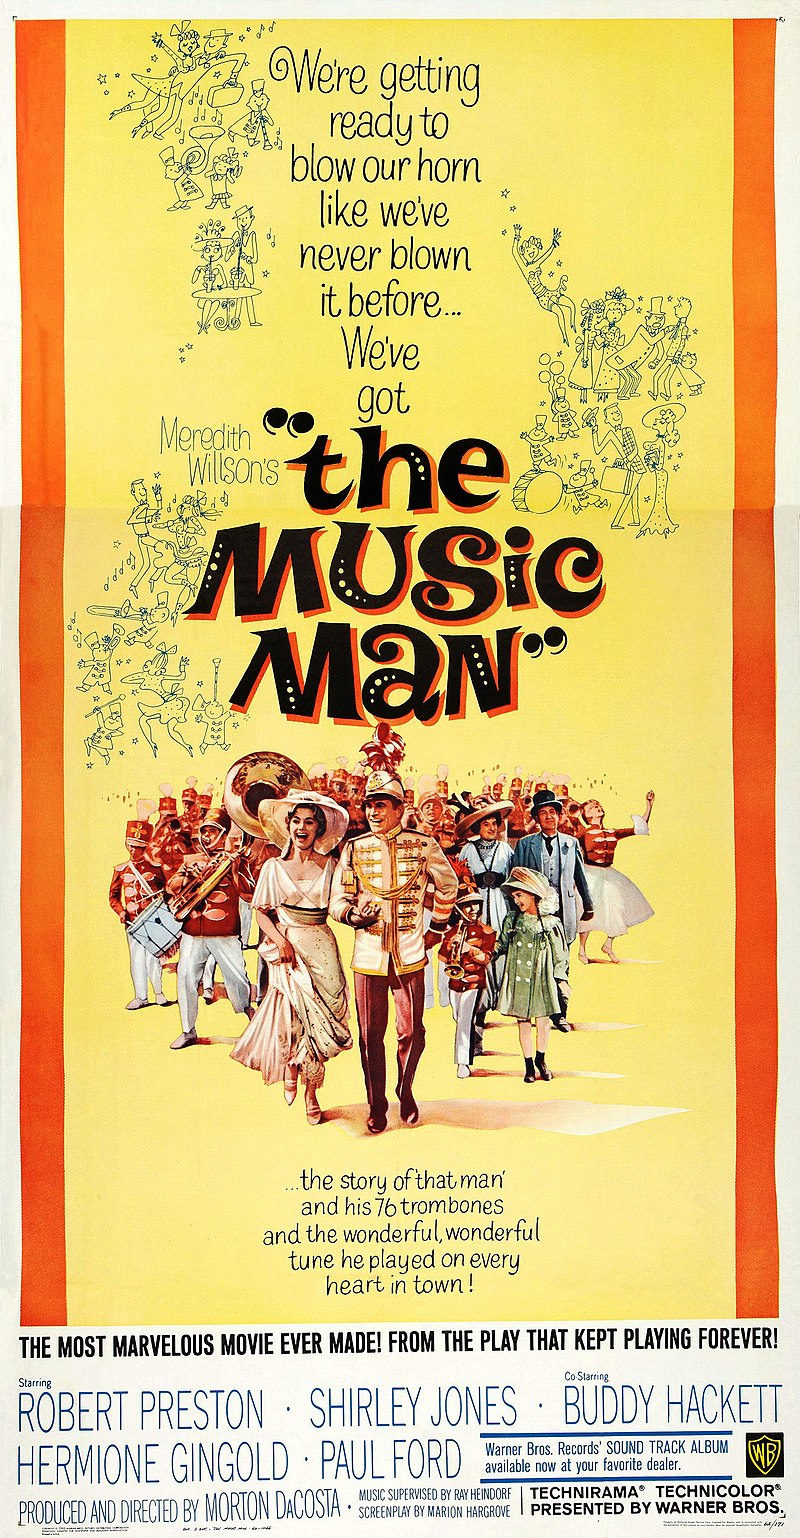 The Music Man (1962 film) - Wikipedia